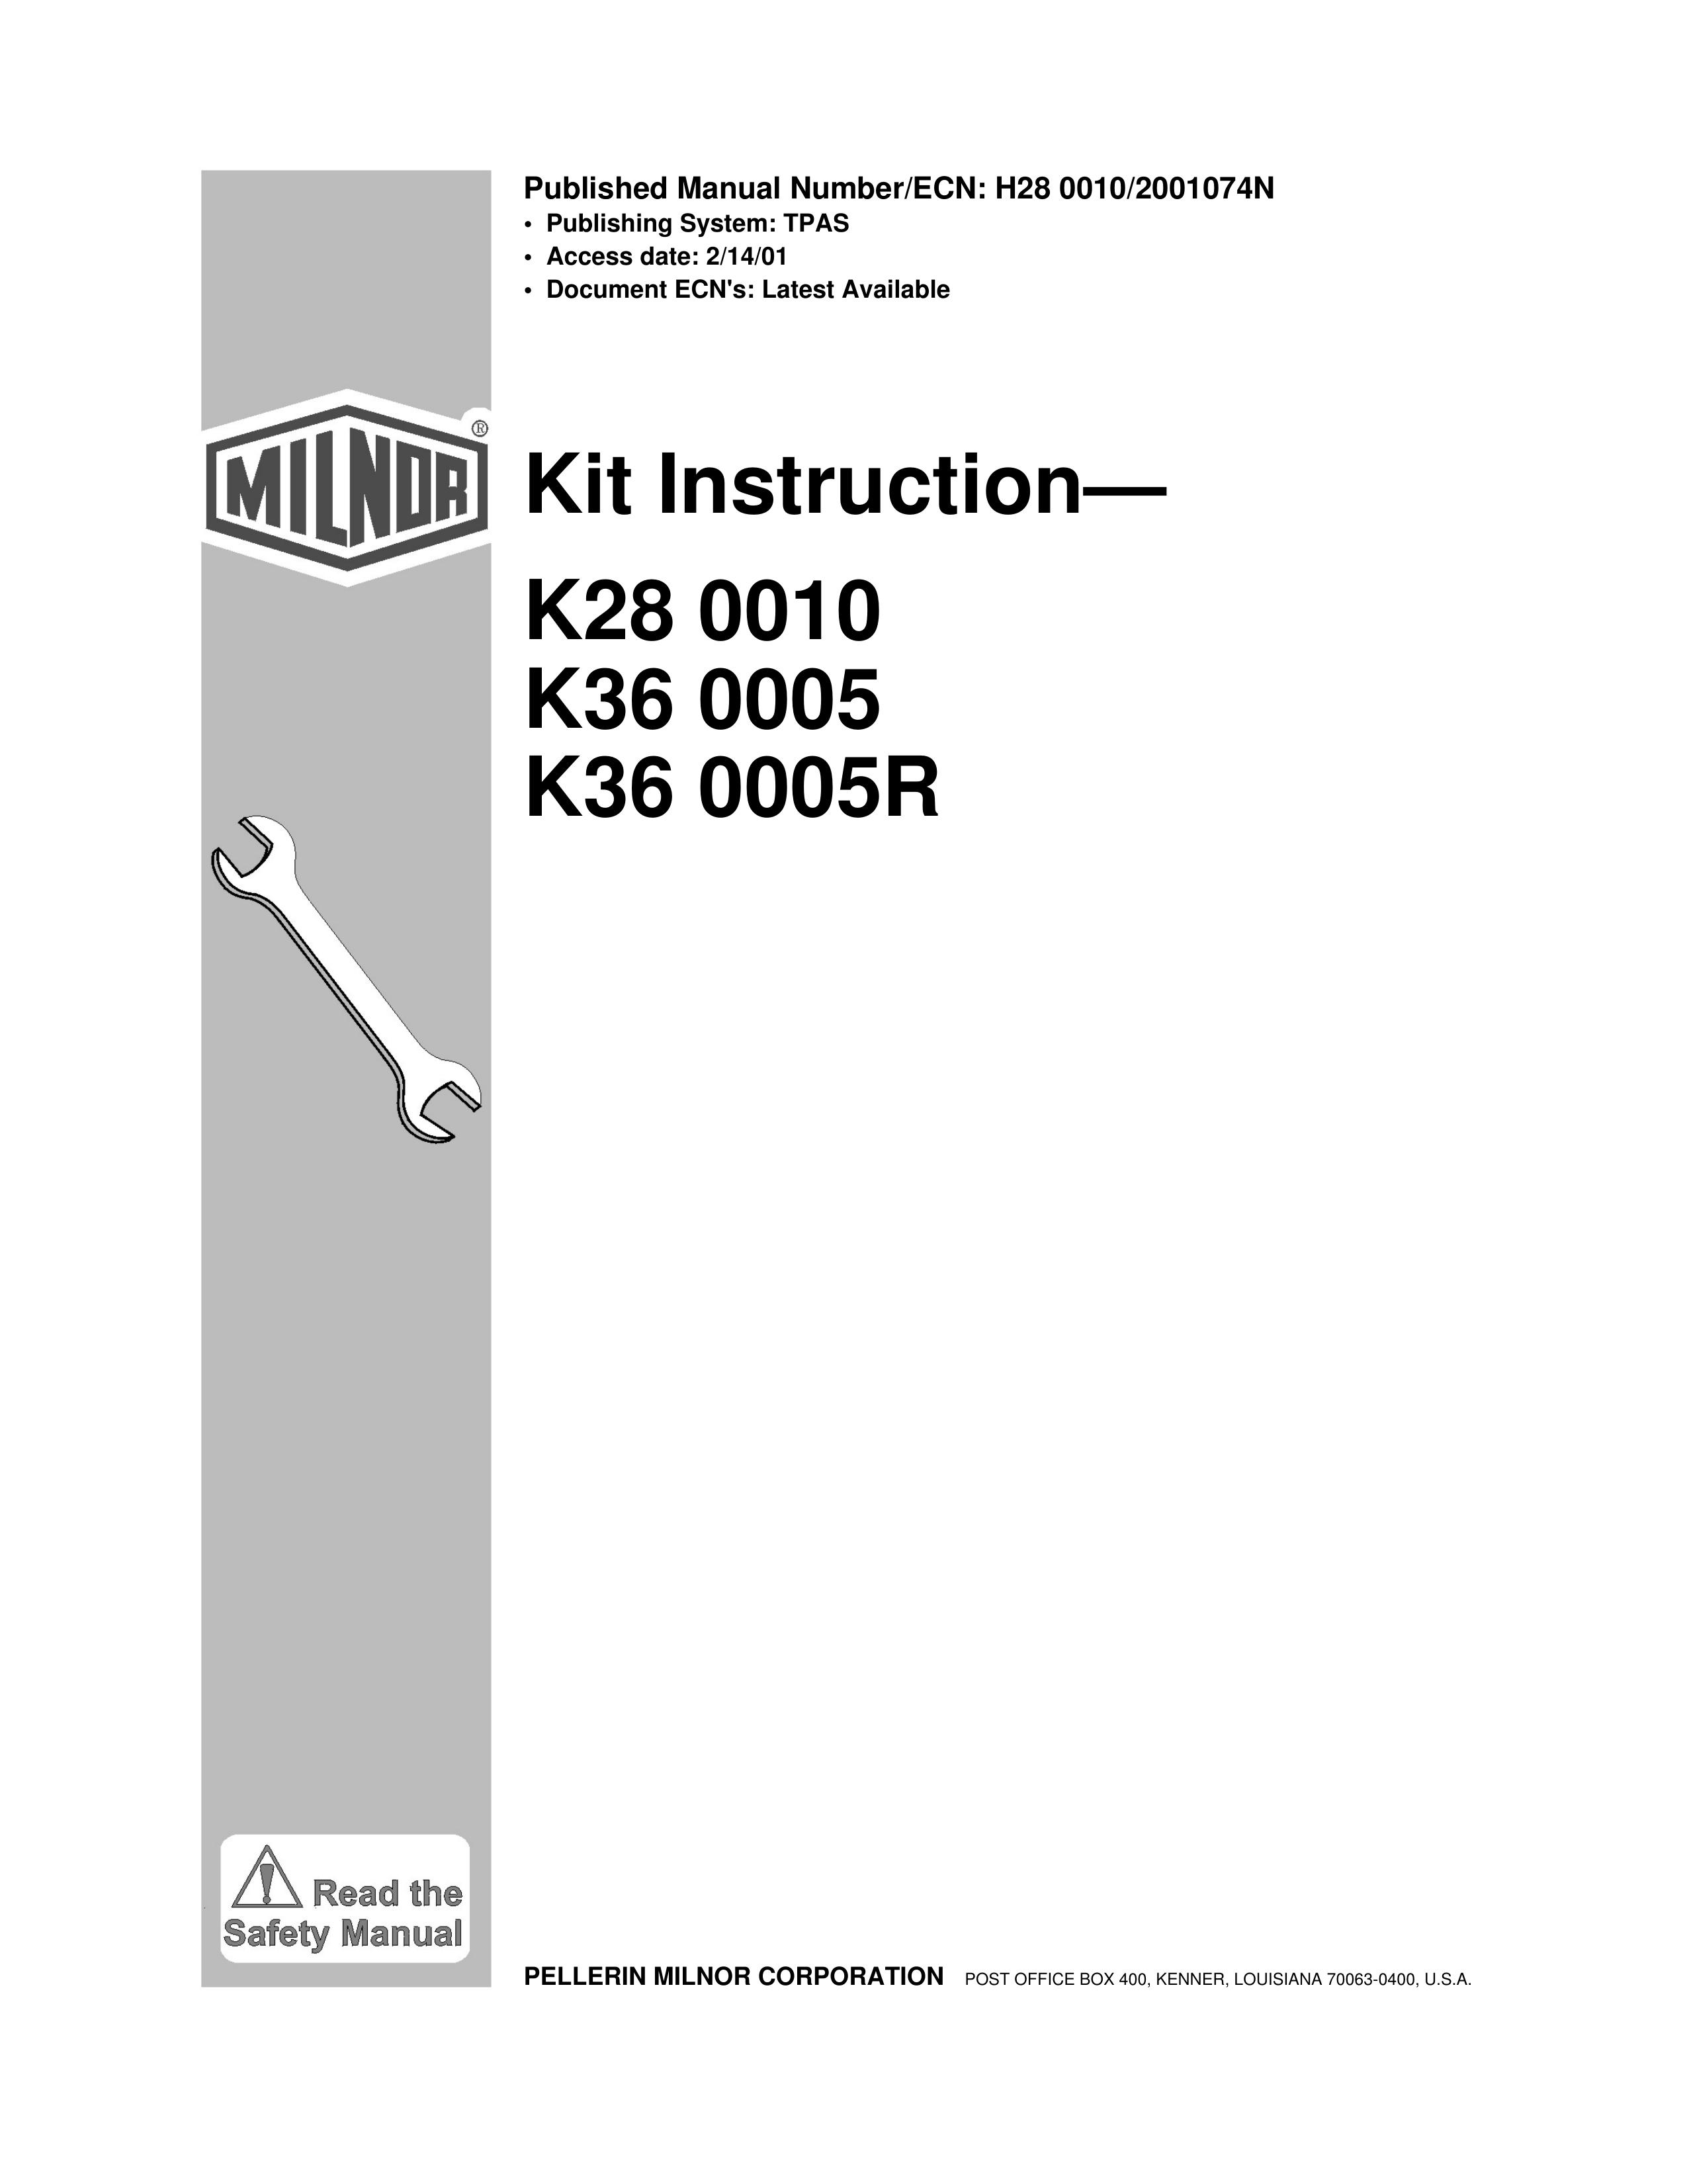 Milnor K28 0010 Washer User Manual